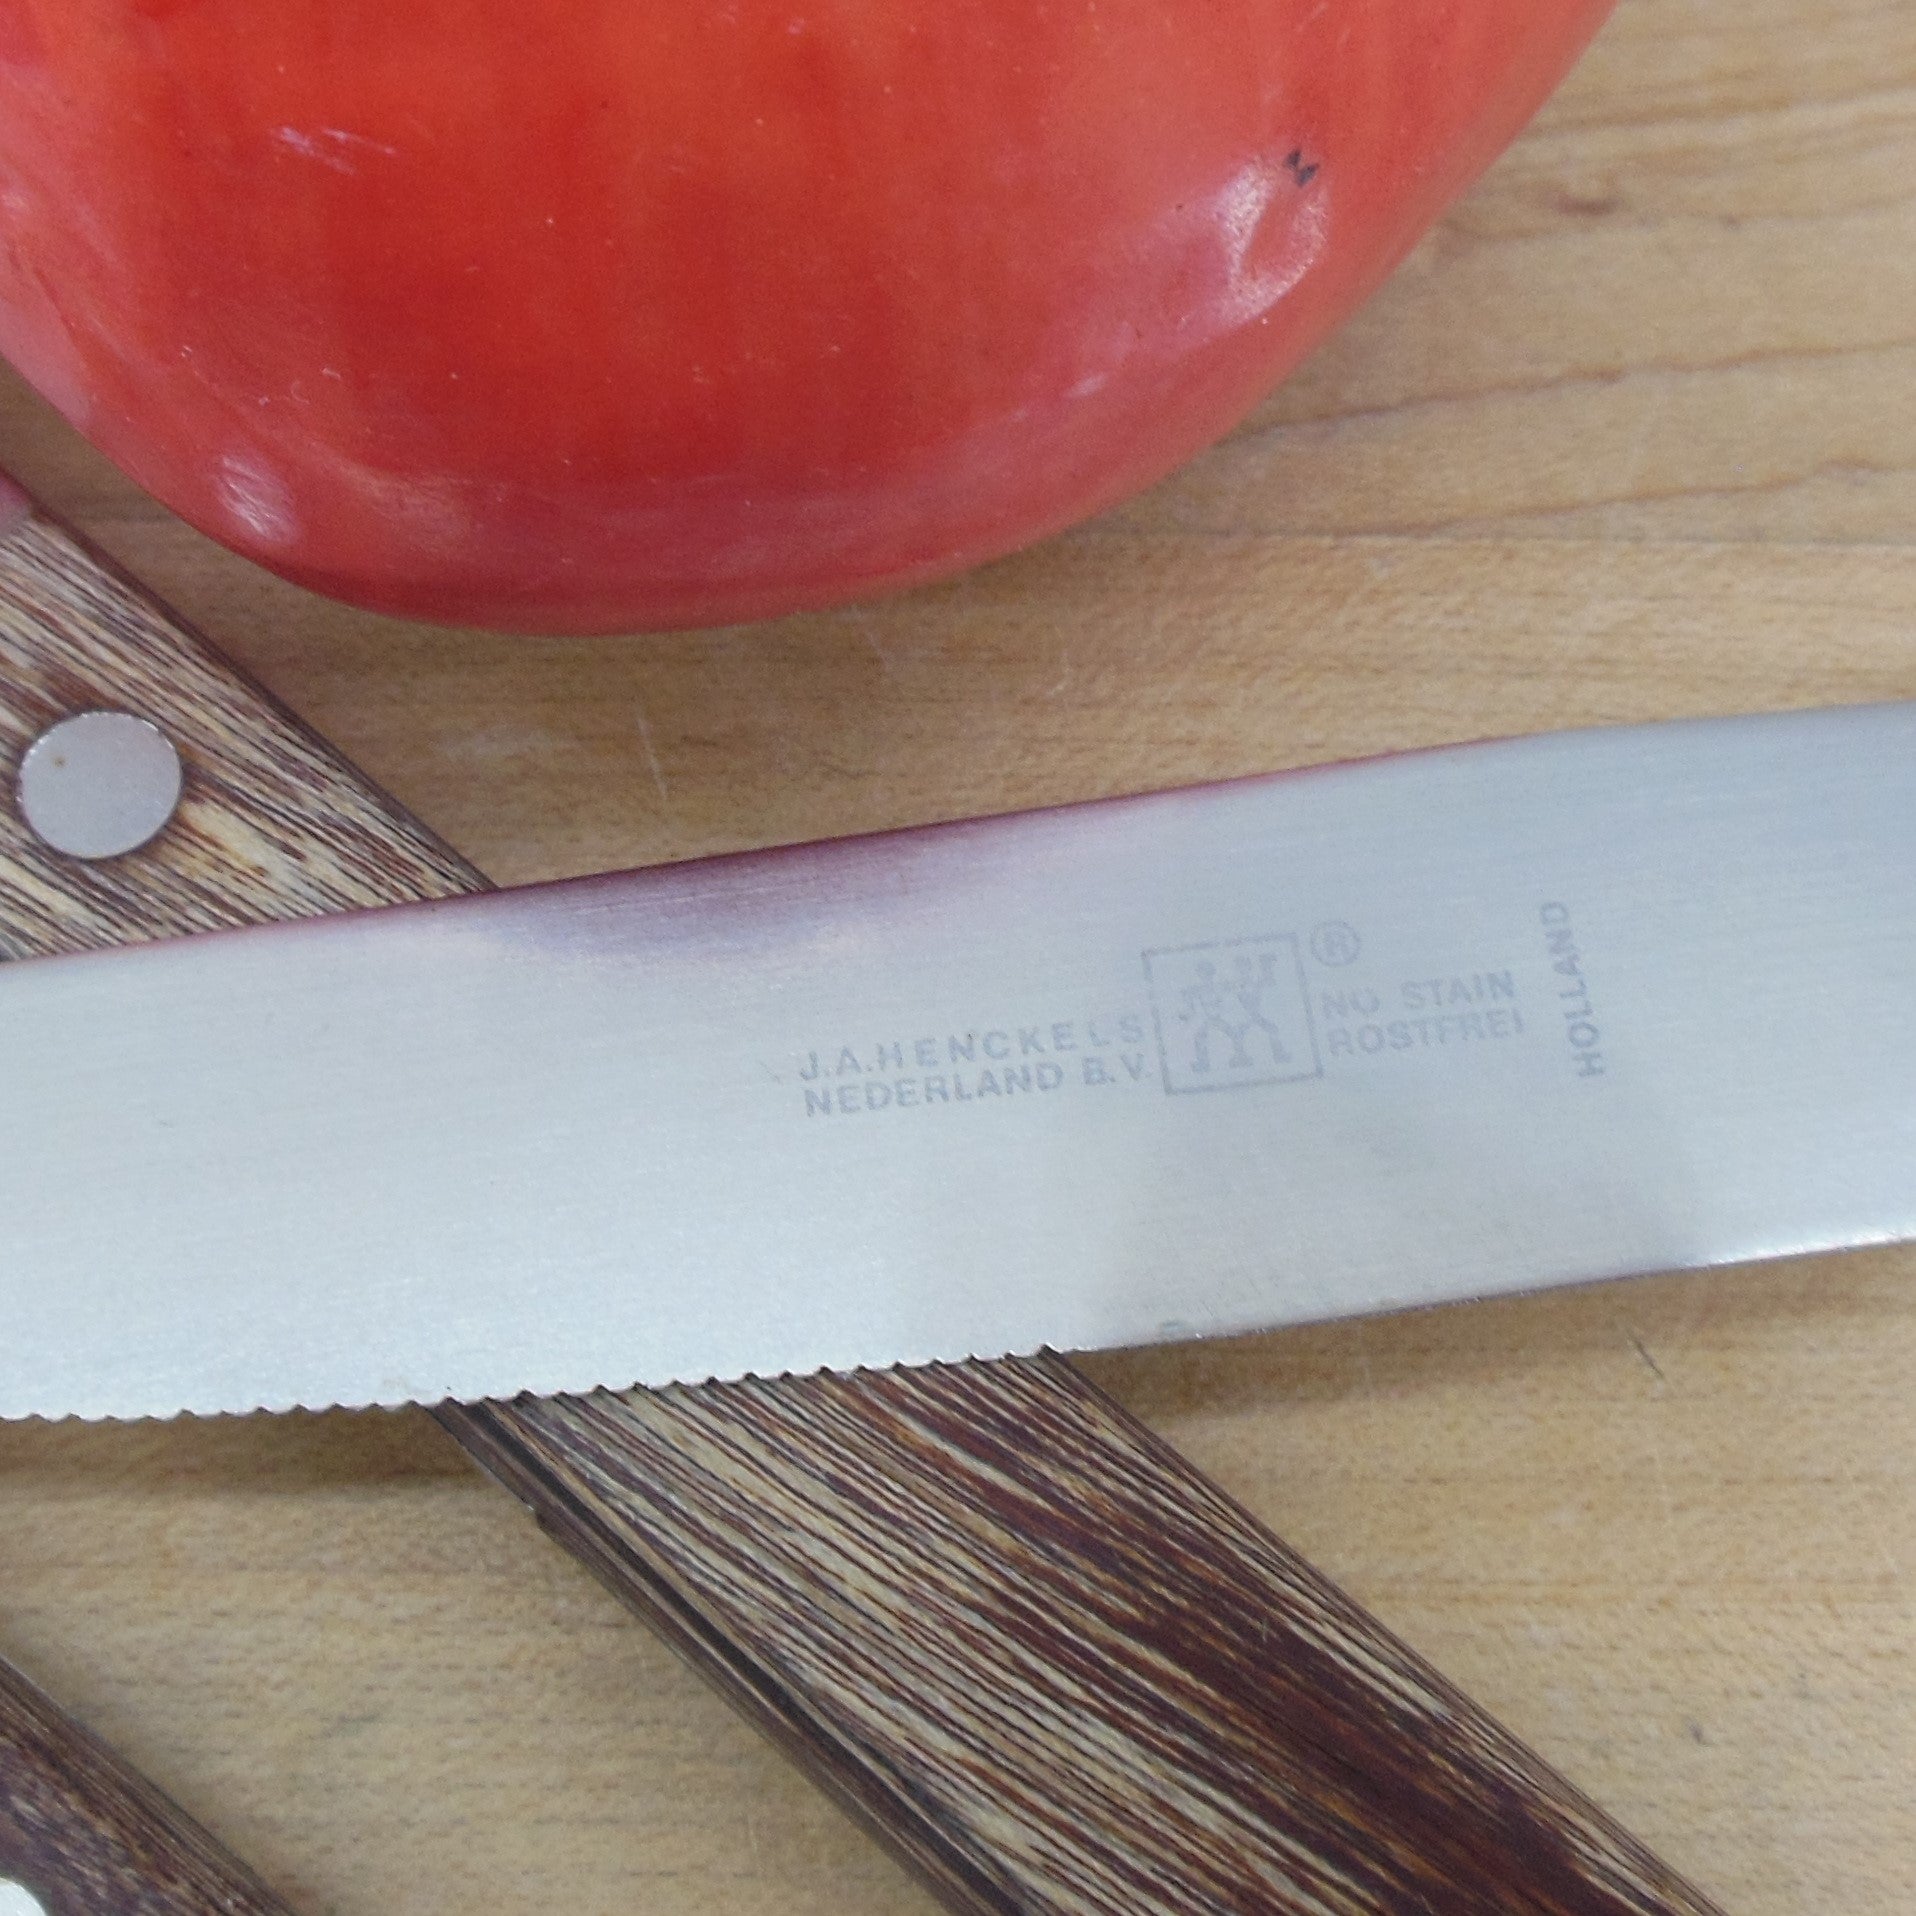 J.A. Henckels Holland 5 Set Stainless Steak Knives - Wood Handles pre-owned